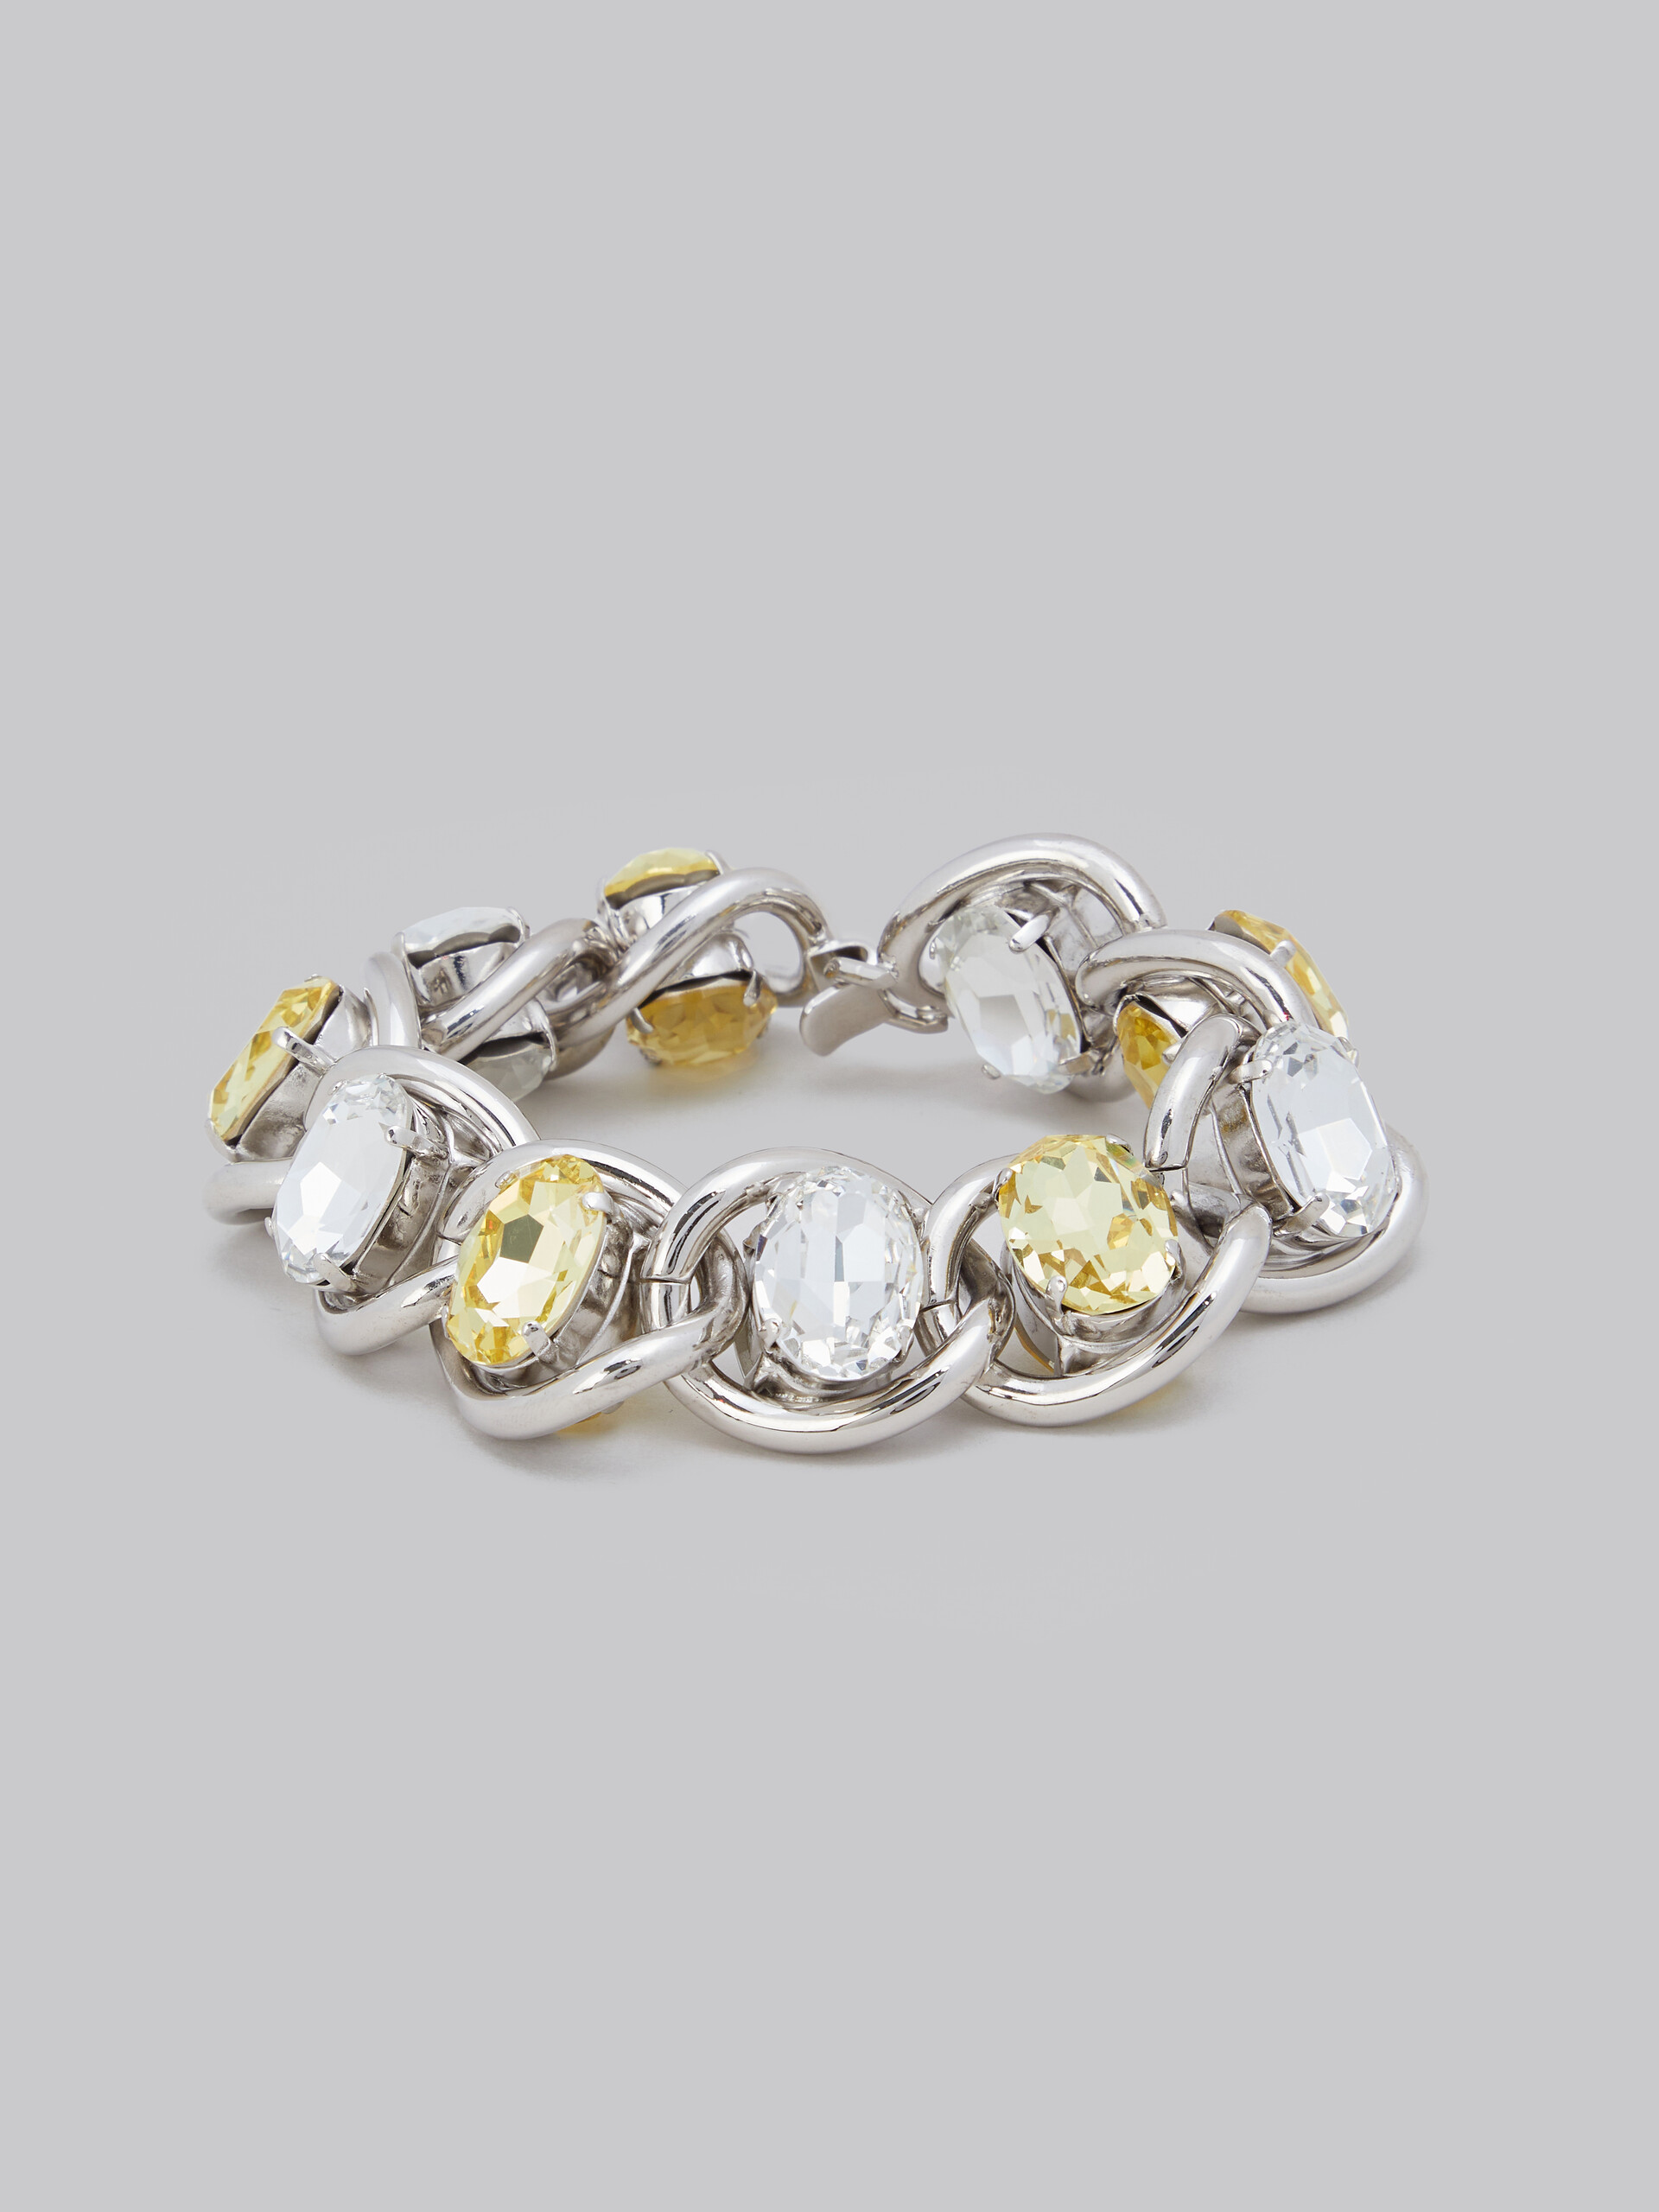 Clear and yellow rhinestone chunky chain bracelet - Bracelets - Image 4